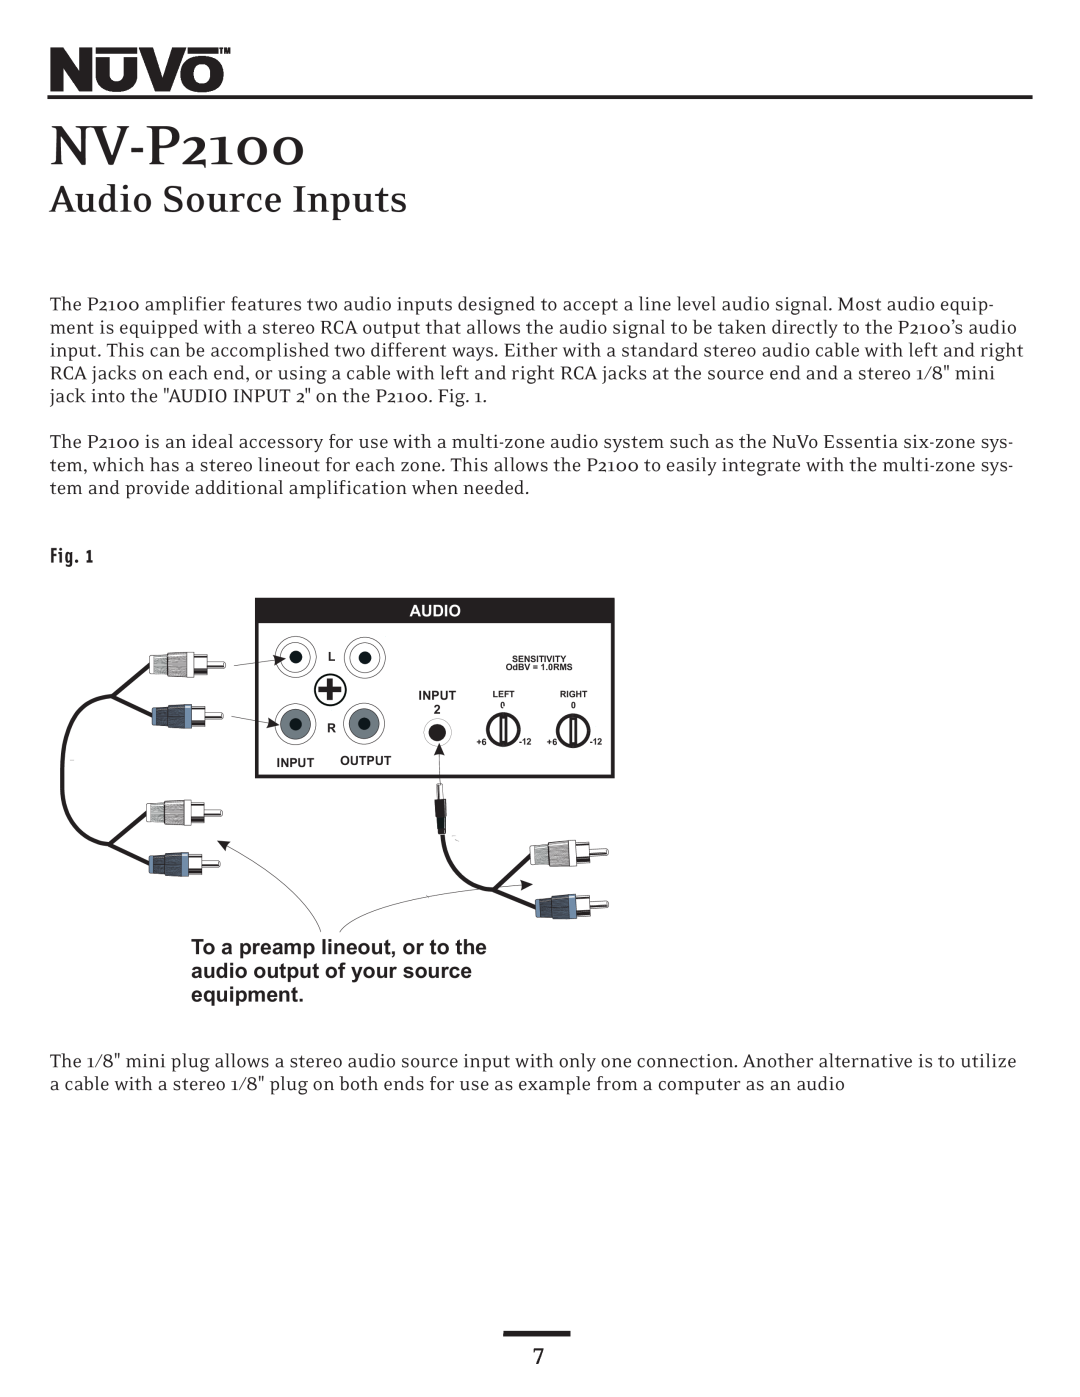 Nuvo NV-P2100 owner manual Audio Source Inputs 